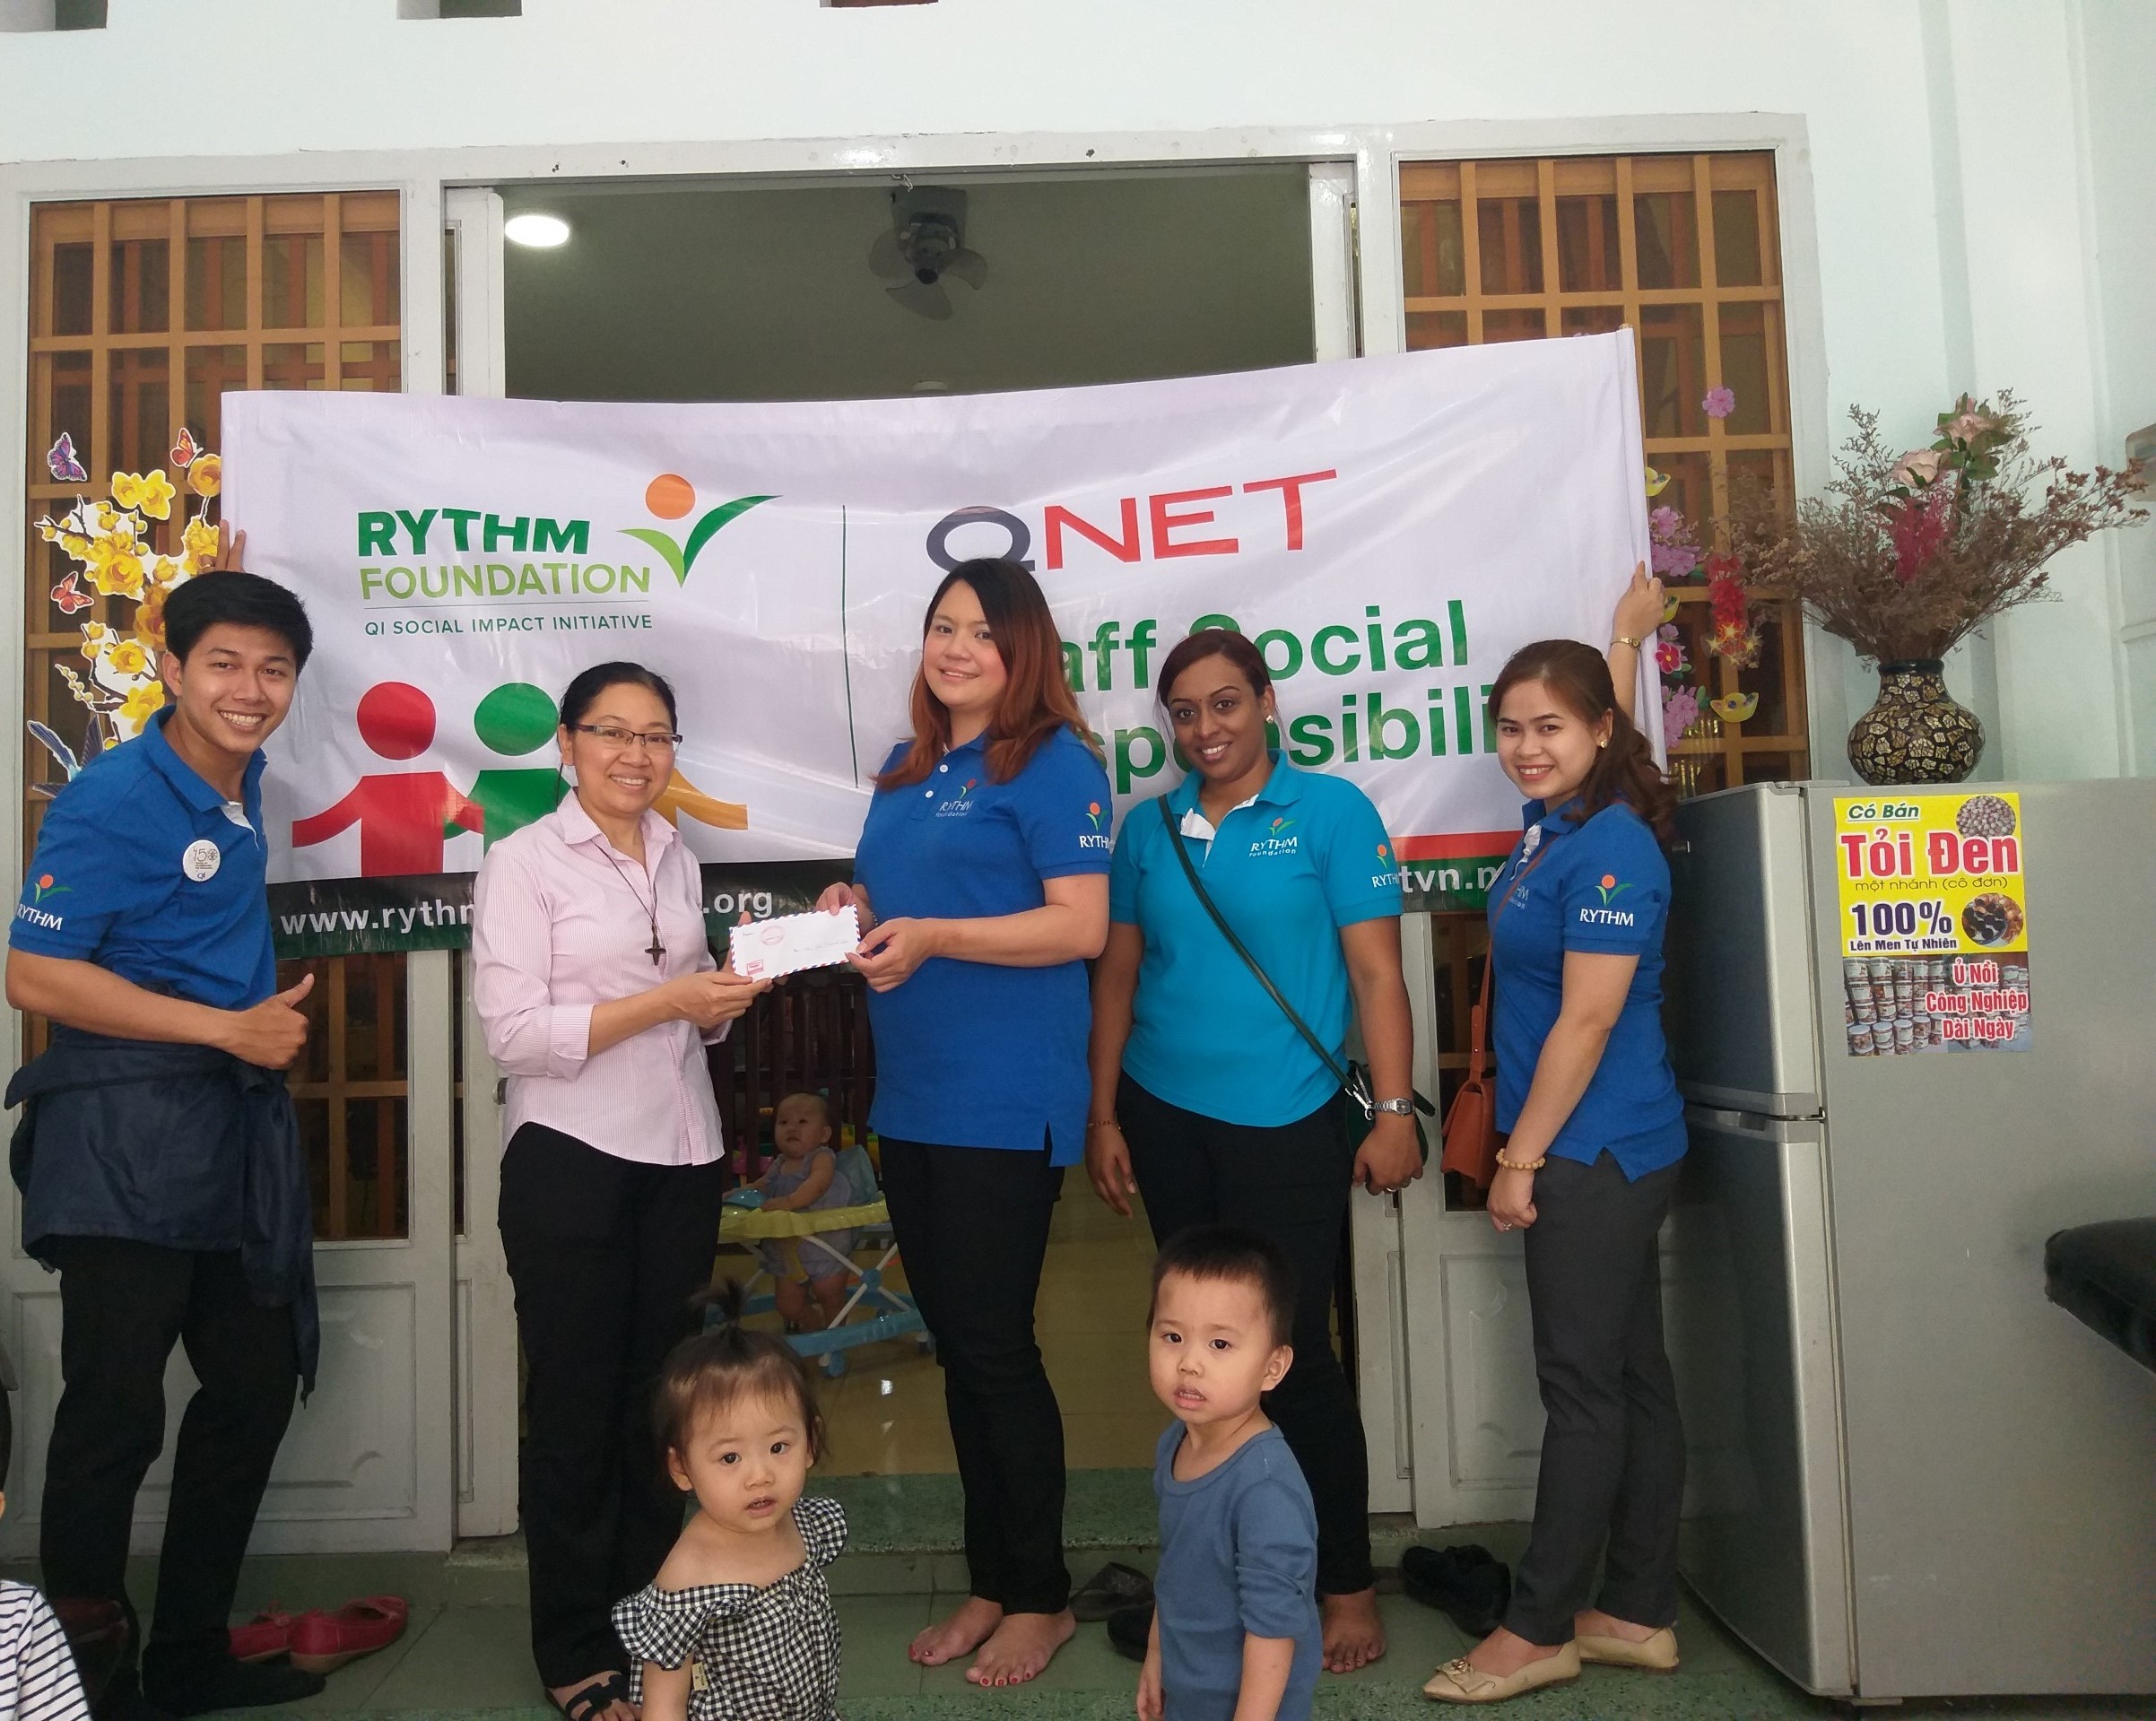 QNET staff bring cheer to unwed mothers in Vietnam